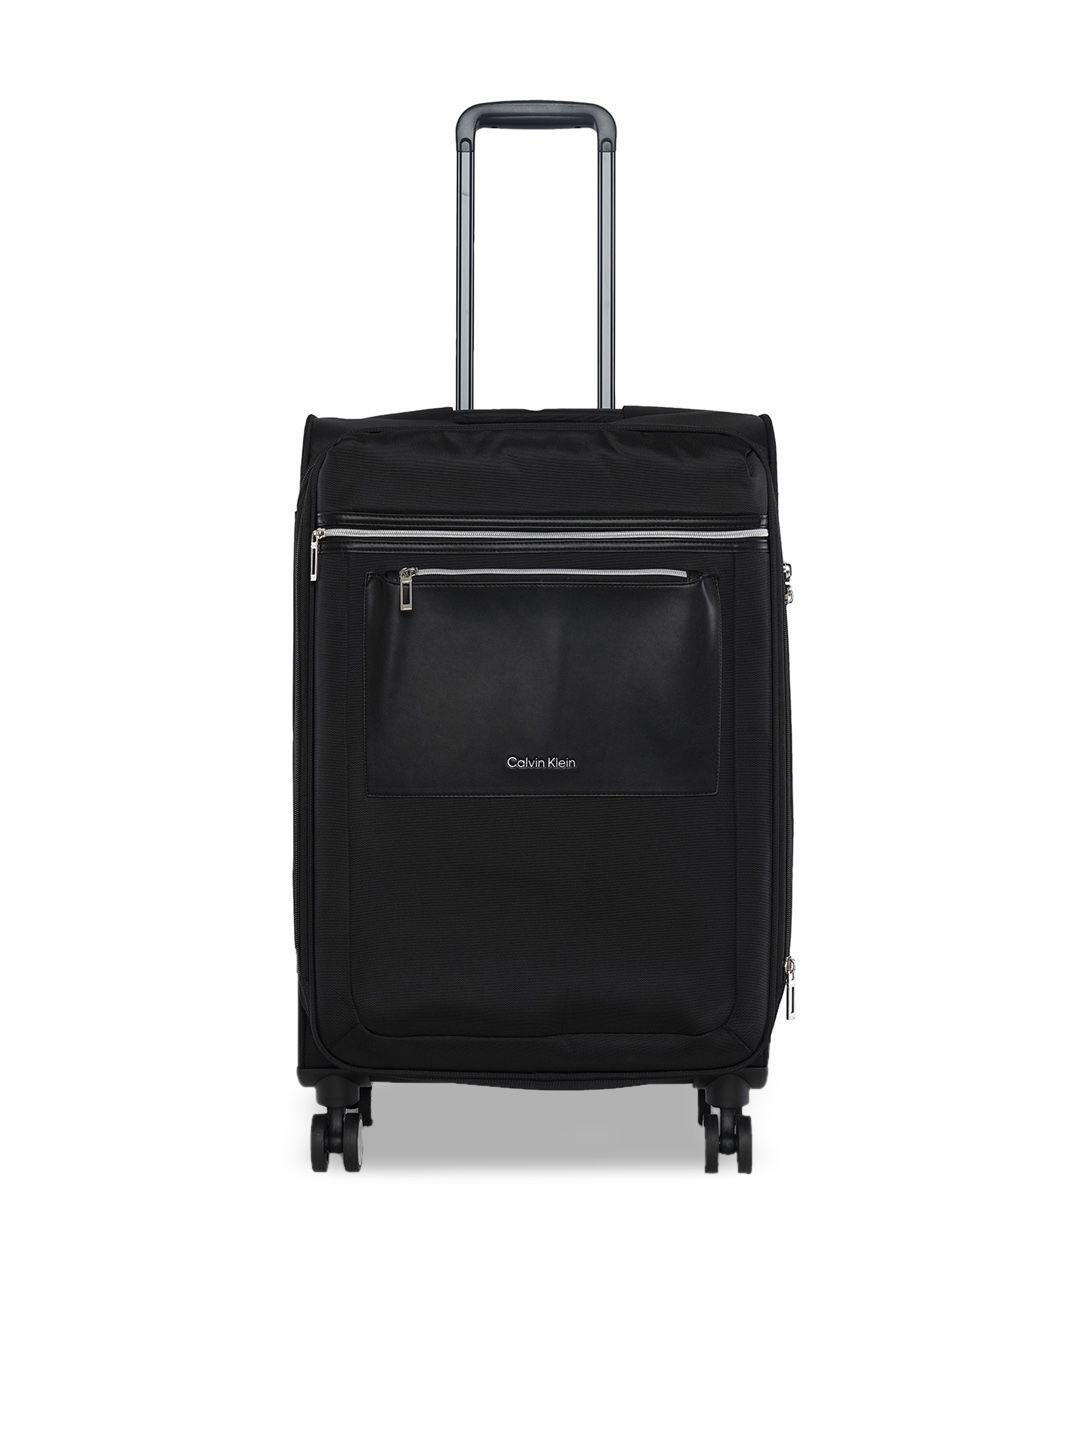 calvin klein union square range black color soft case polyester medium size luggage